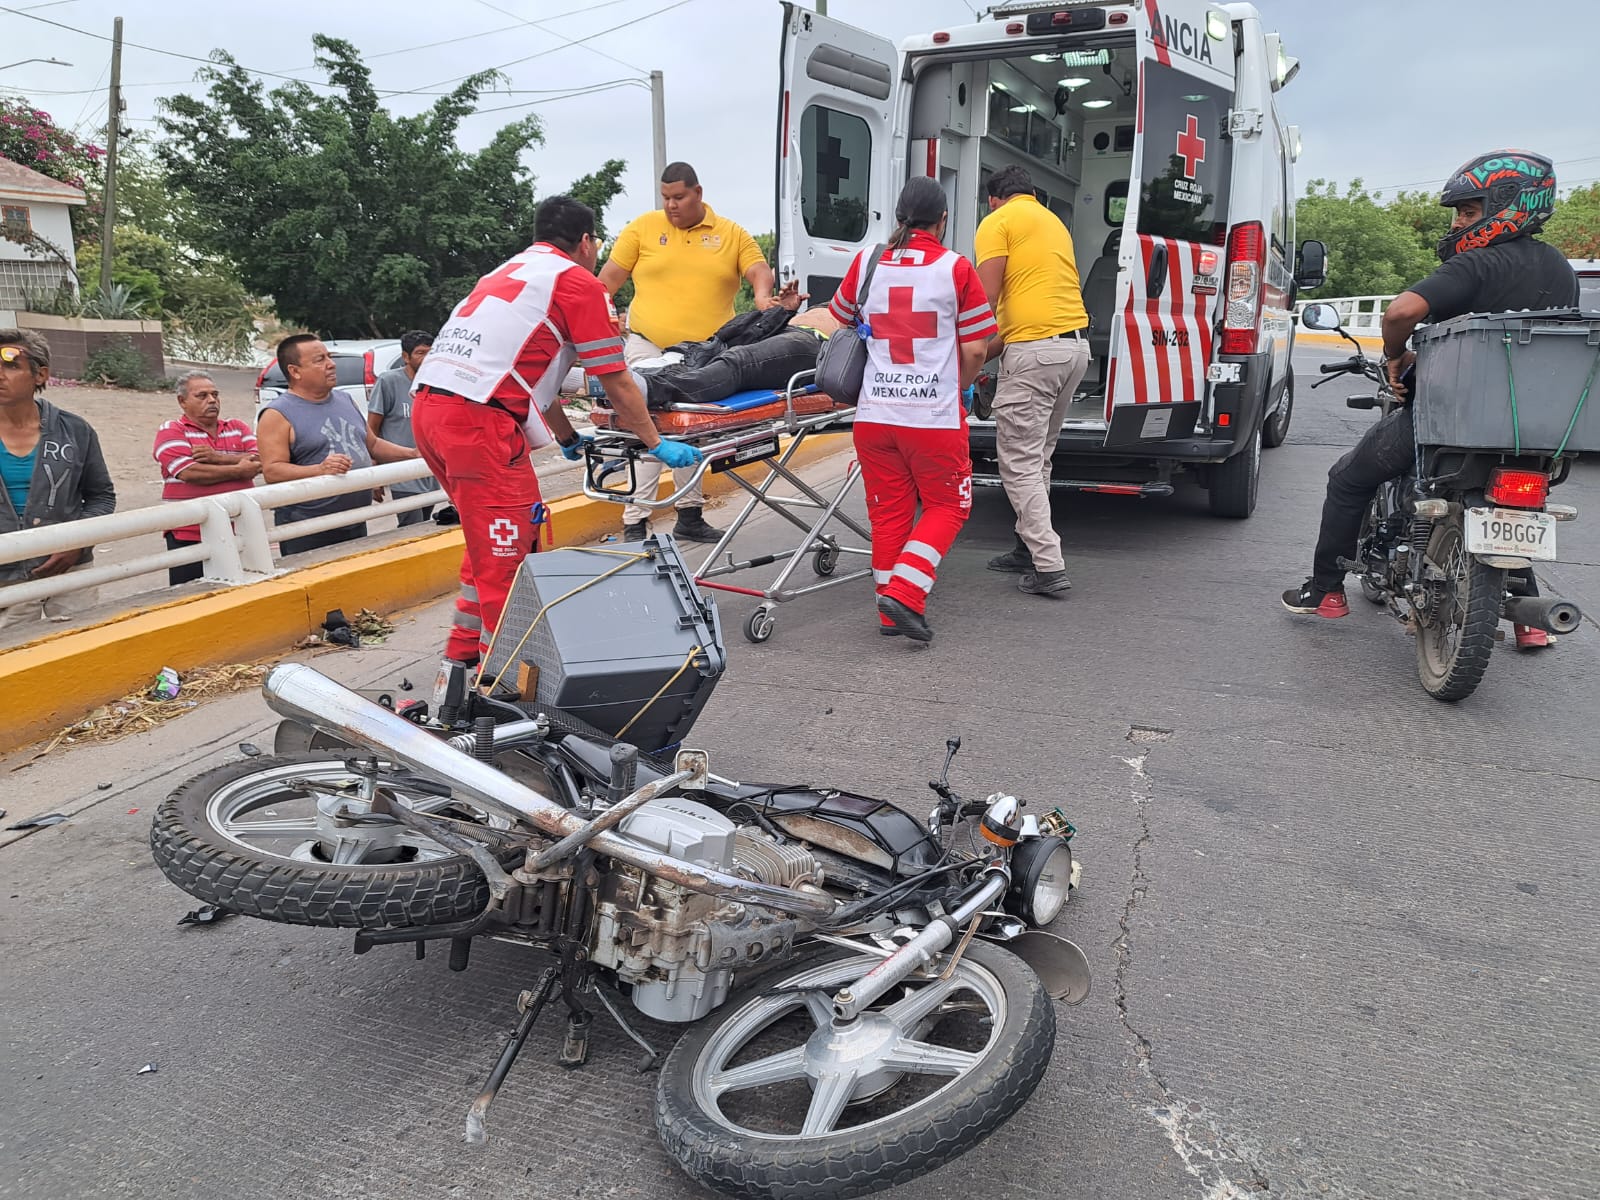 Motociclista queda herido tras chocar de frente contra carro conducido por embarazada, en Culiacán